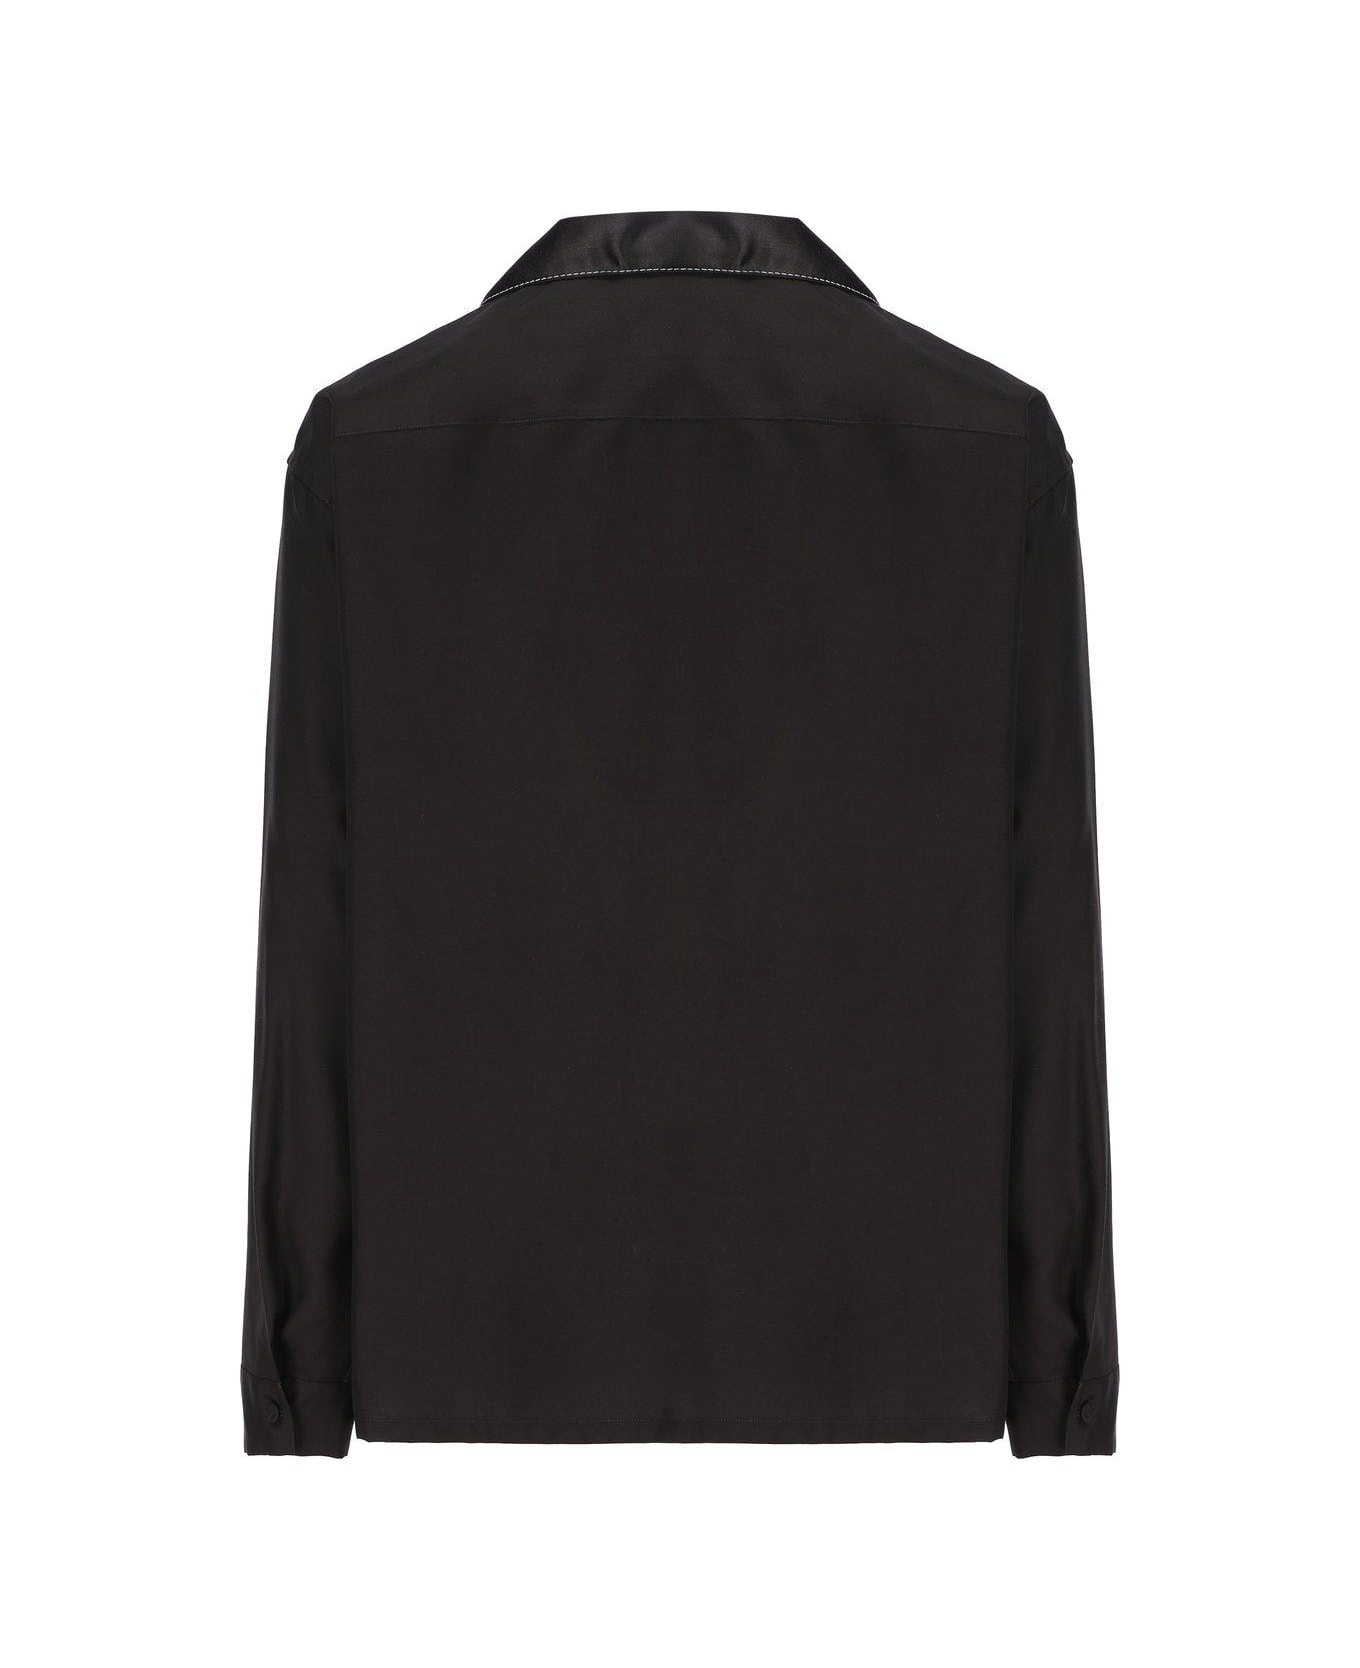 Prada Long-sleeved Buttoned Shirt - Nero